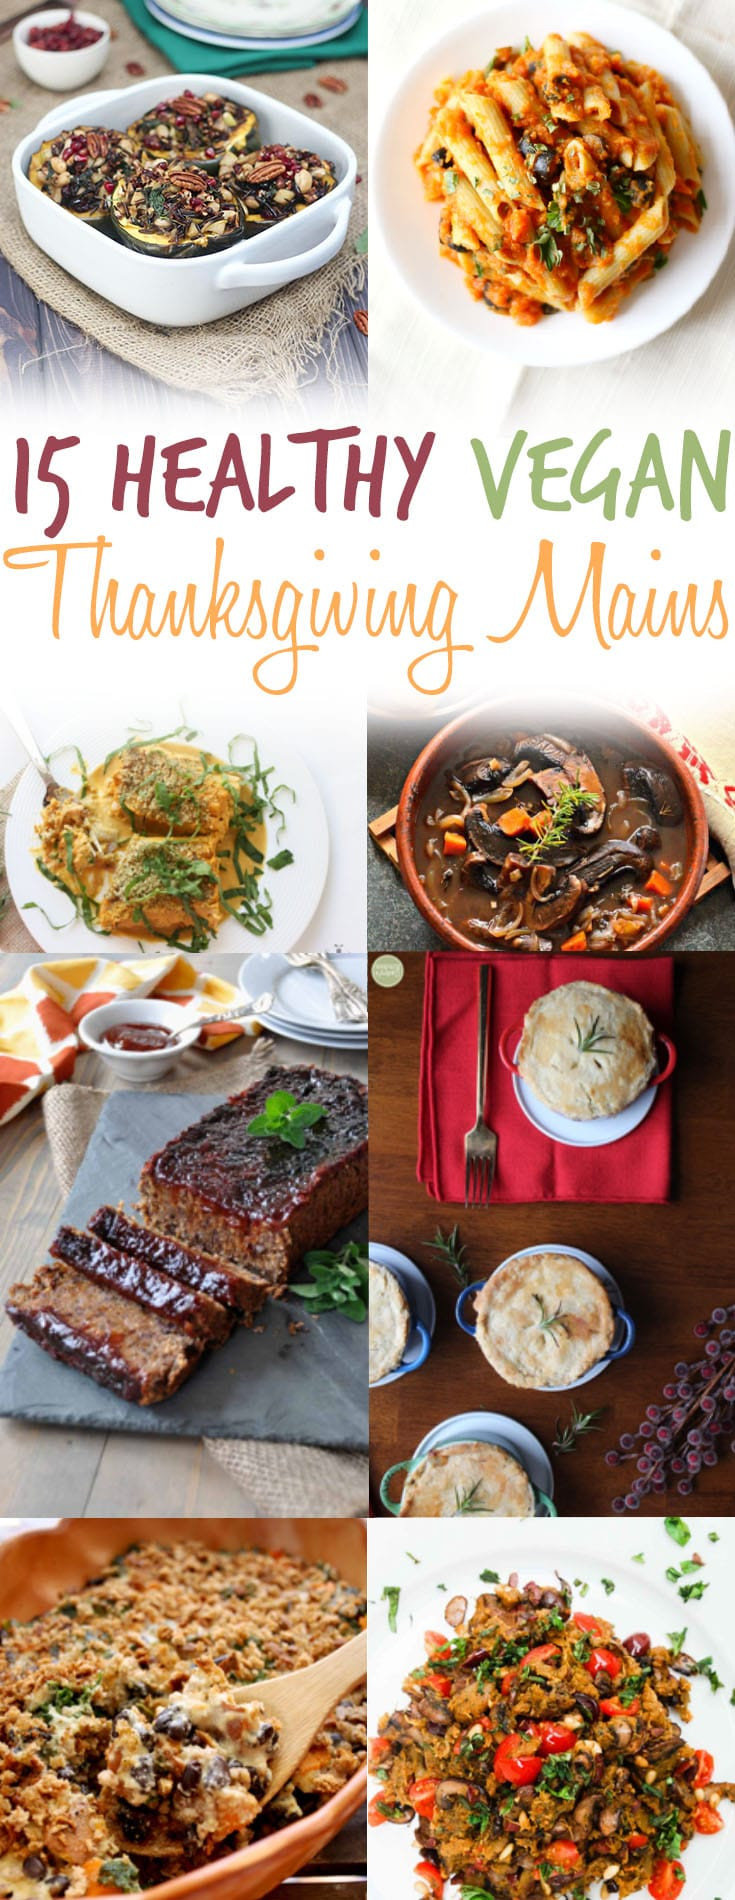 Thanksgiving Main Dishes Not Turkey
 15 Vegan Thanksgiving Main Dishes